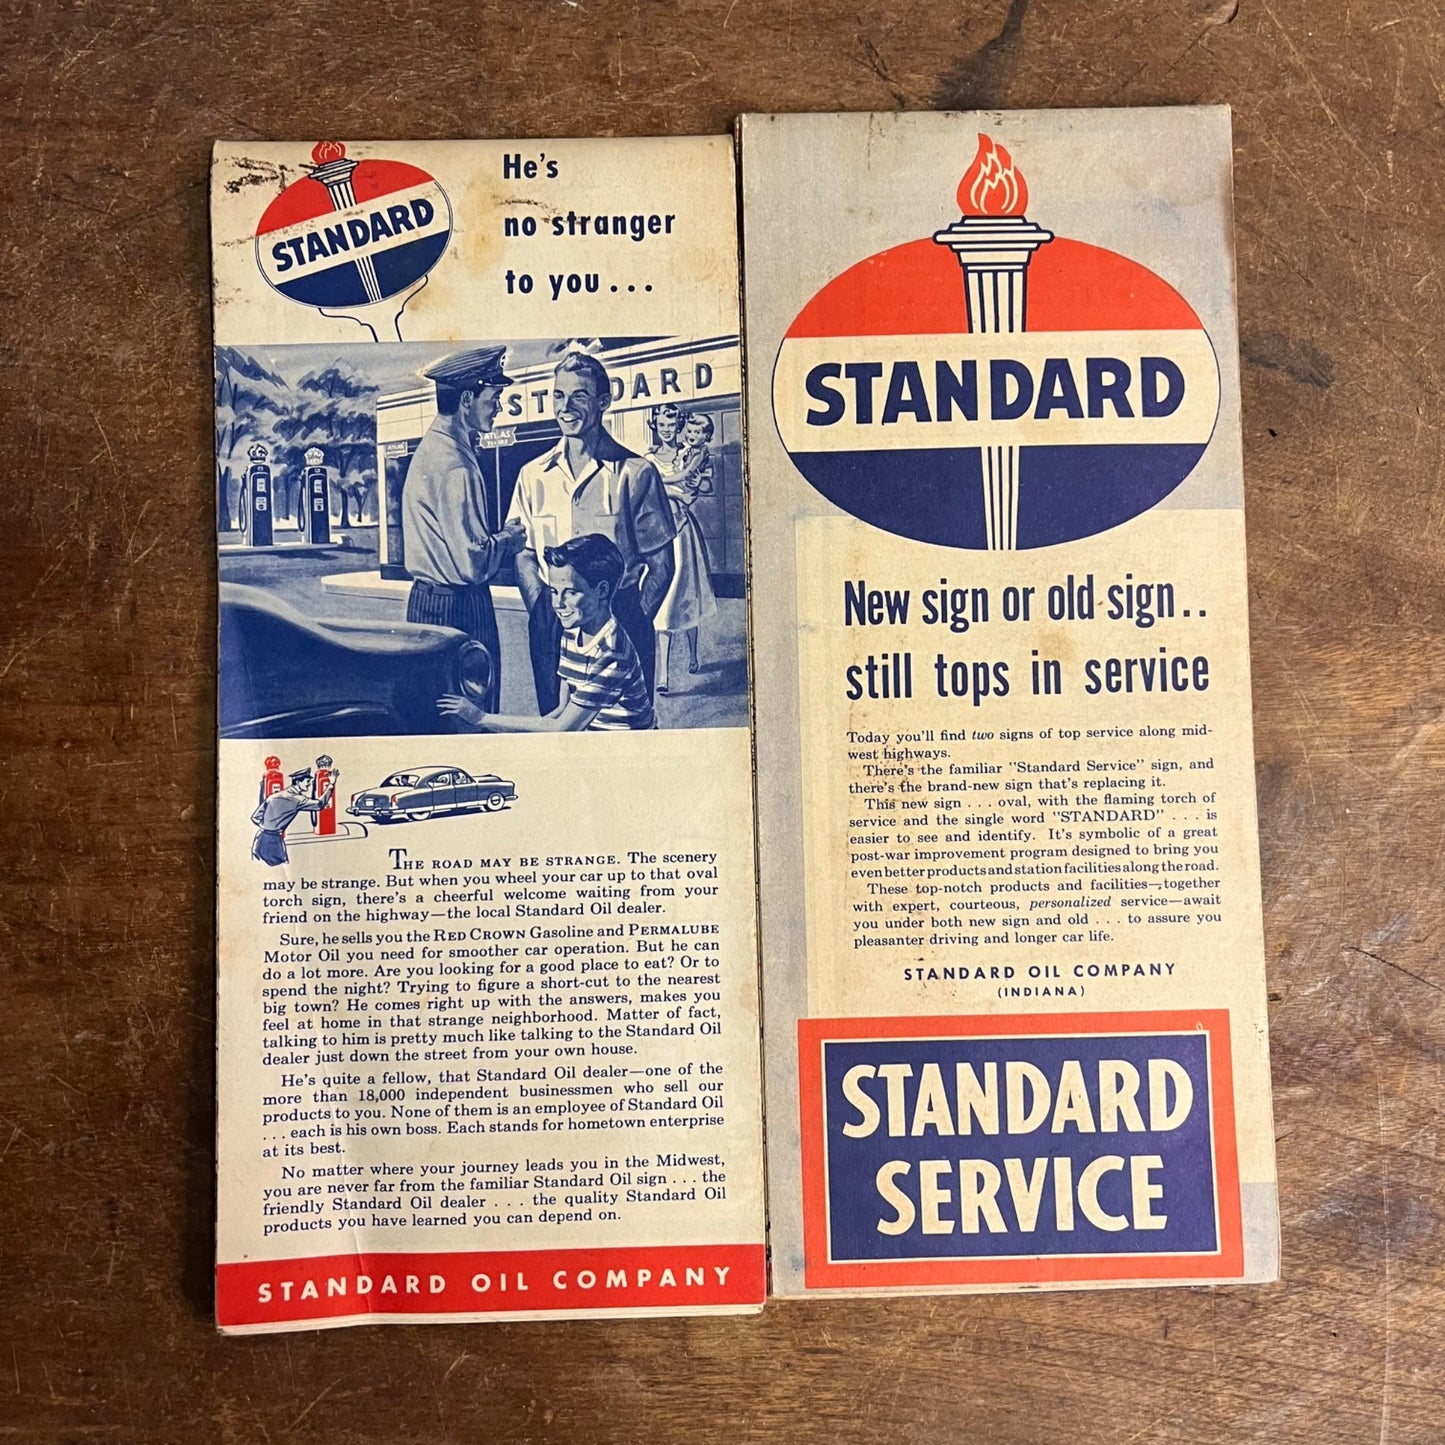 Vintage 1950s Standard Oil Company Highway Road Maps Milwaukee Southeast US